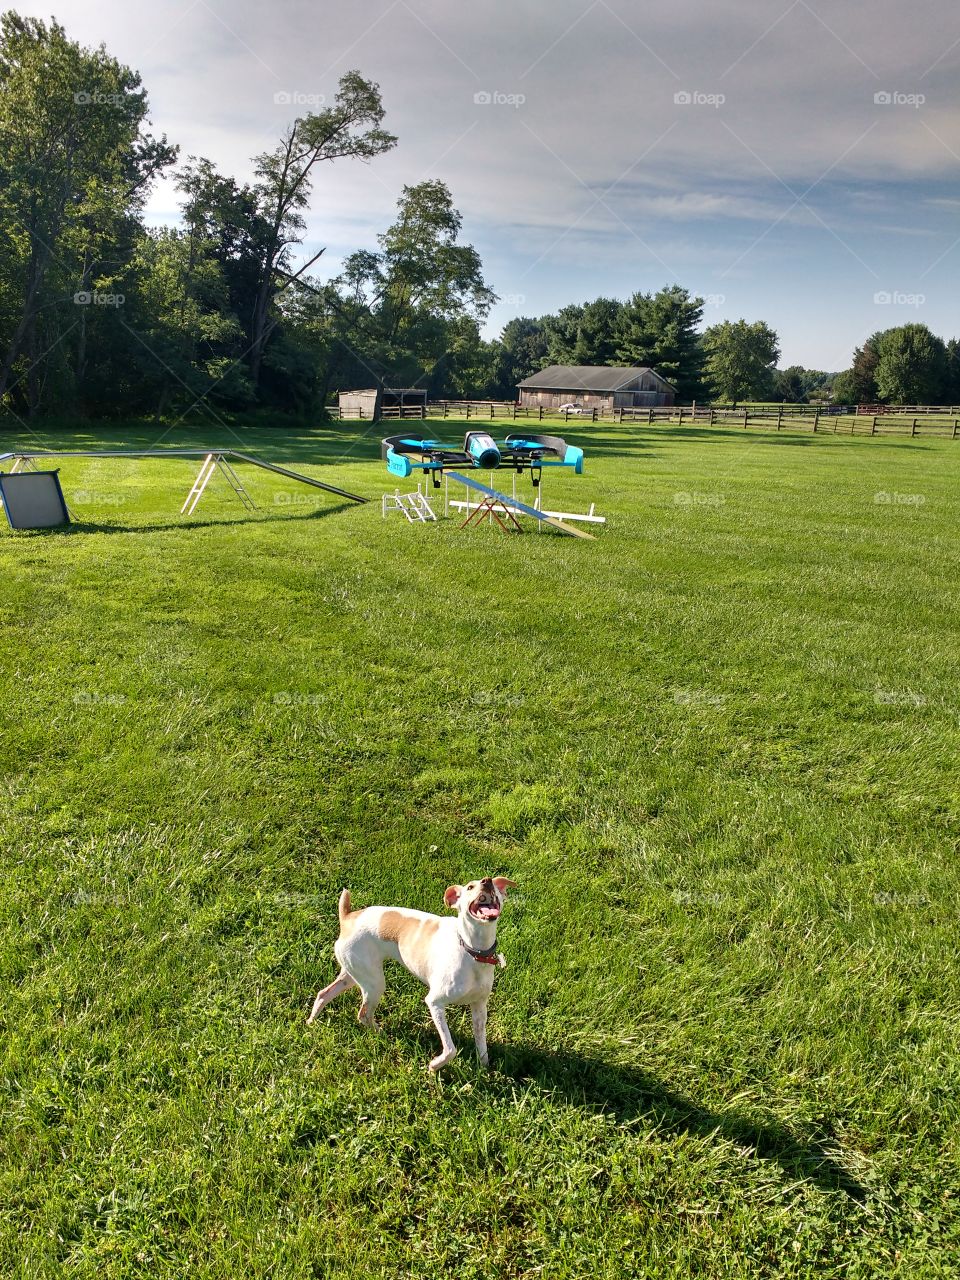 dog barking at a drone in the backyard